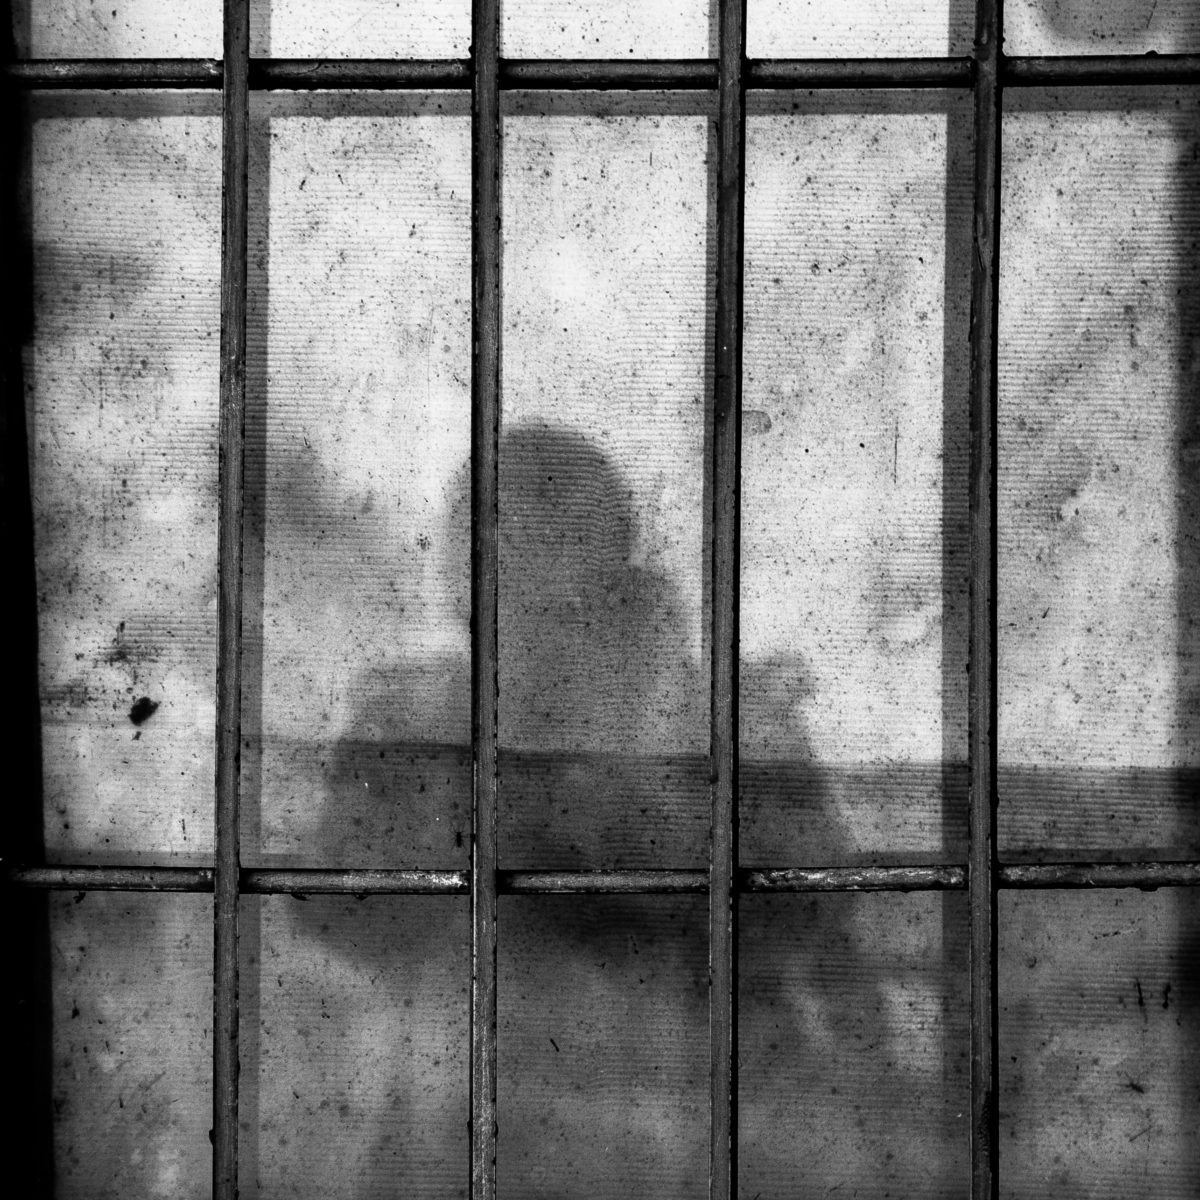 women behind bars